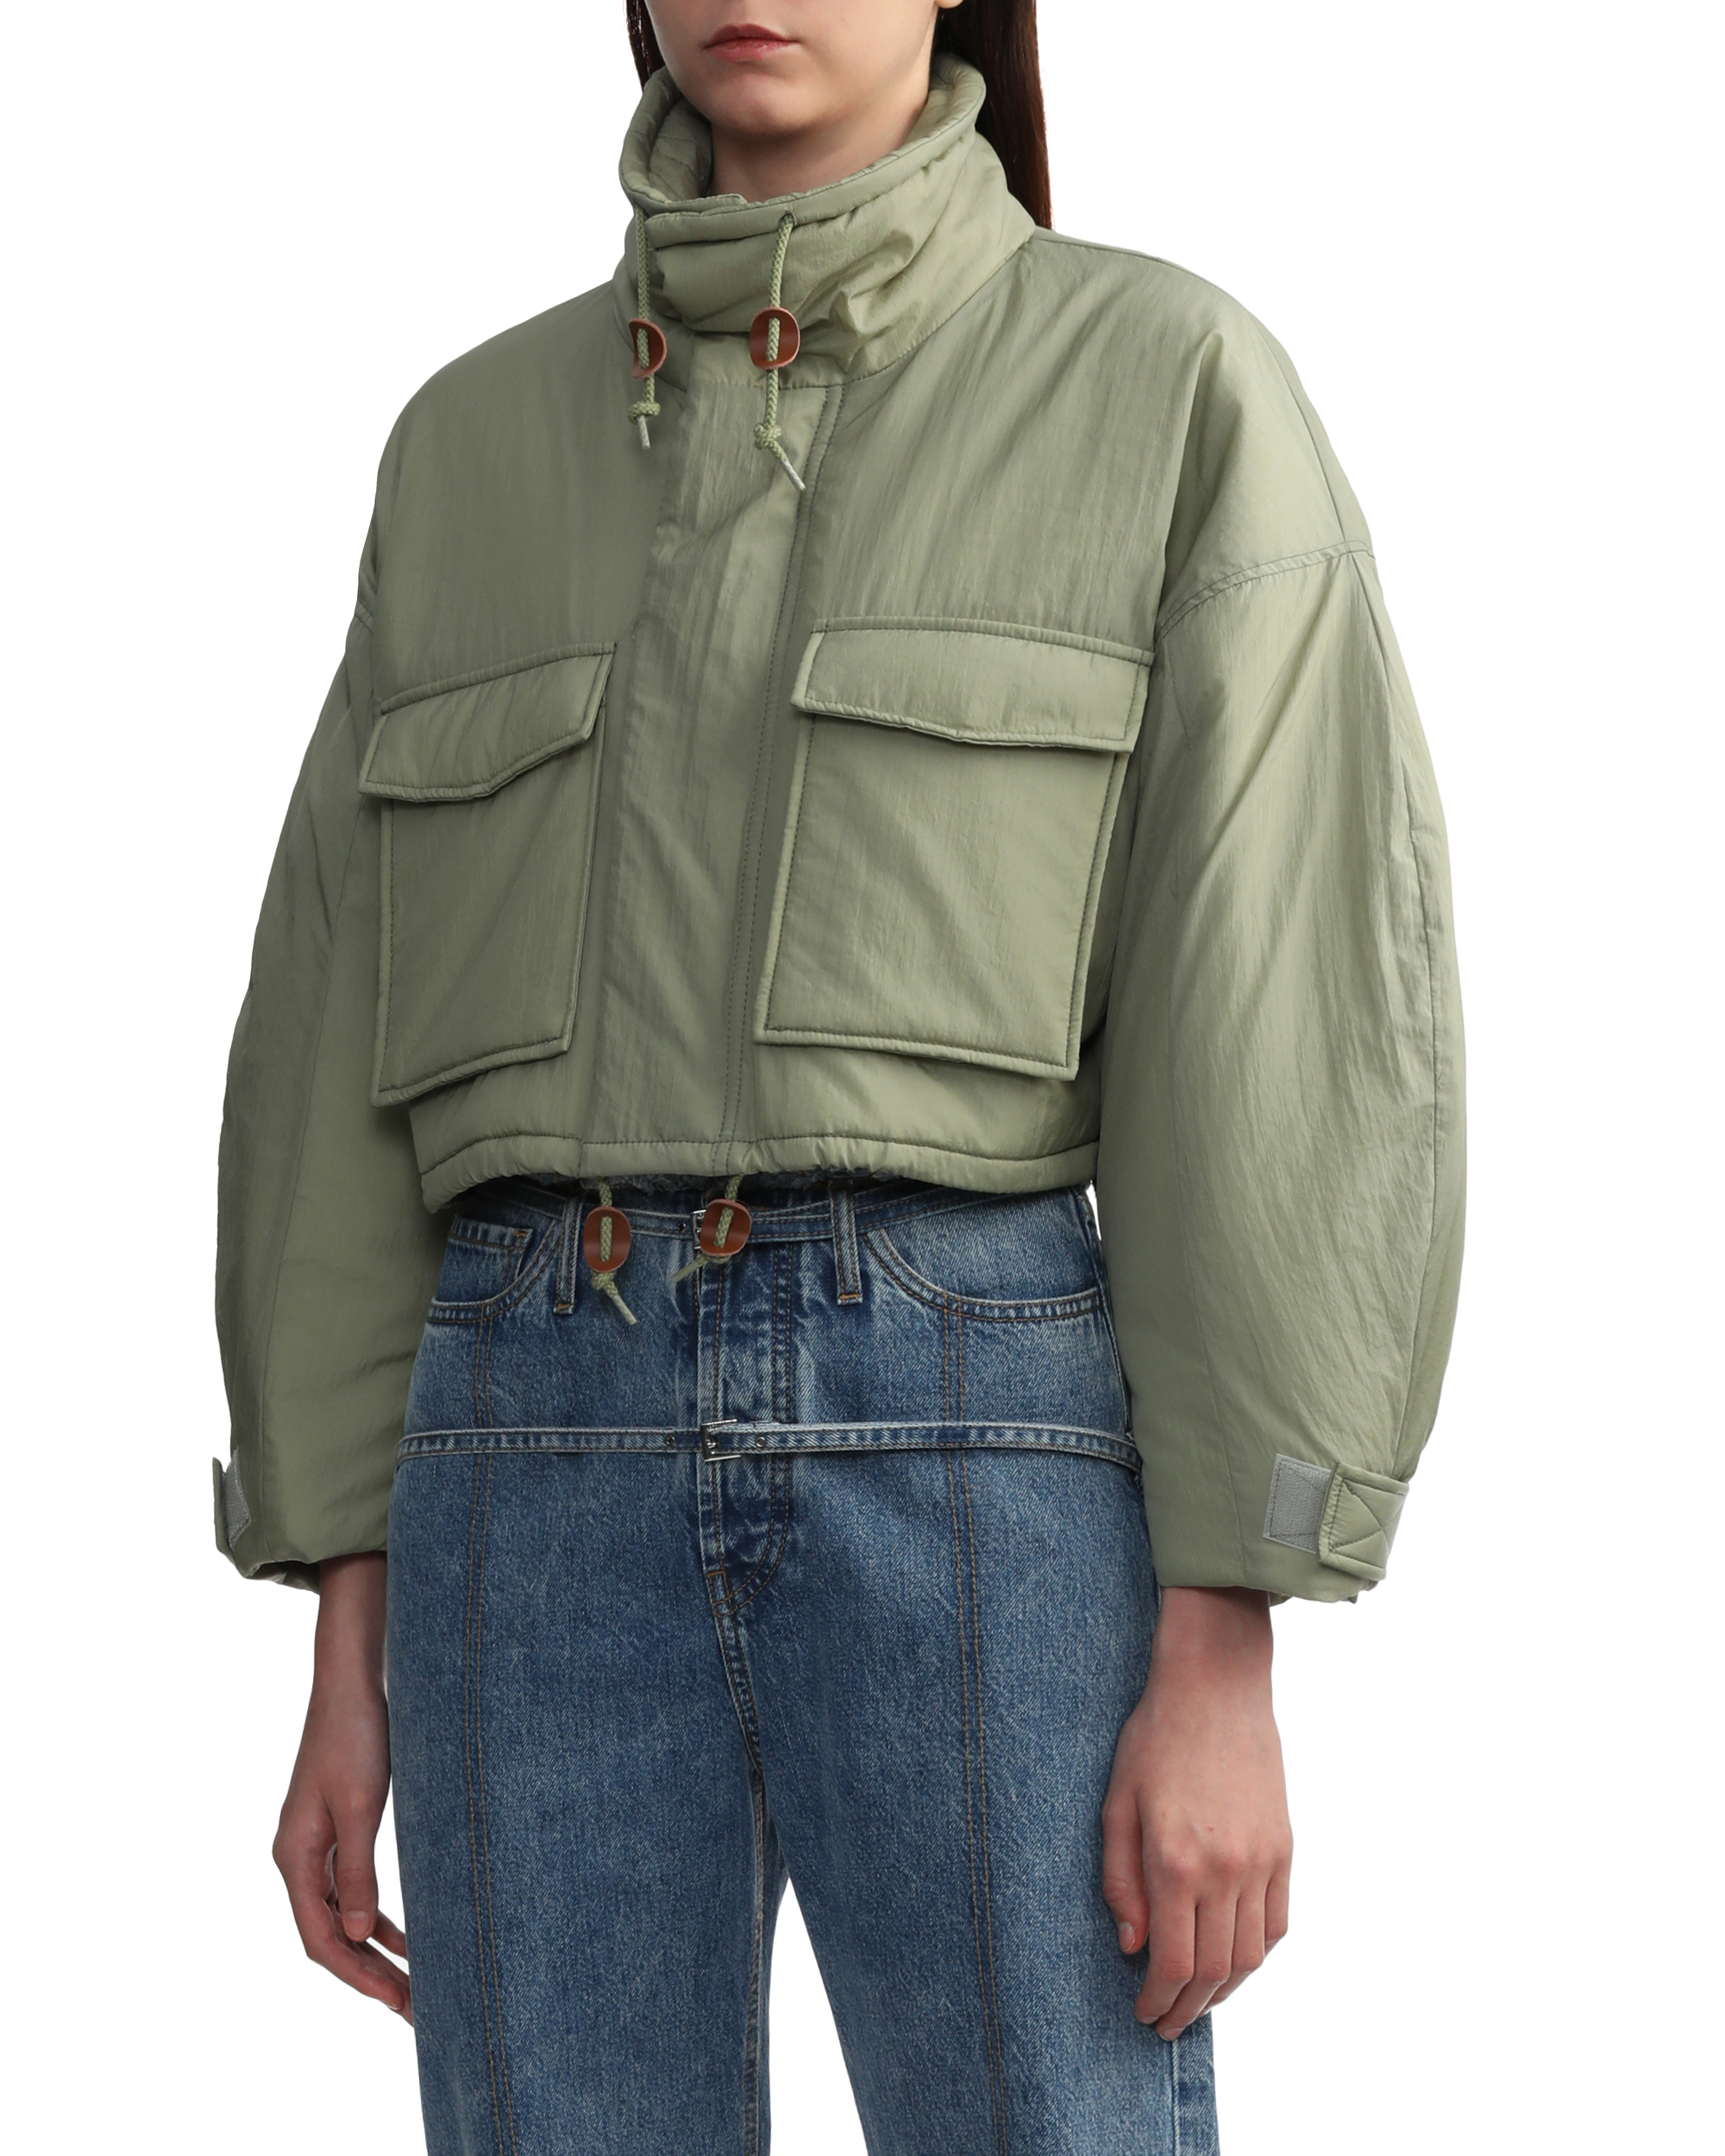 原価39600LEINWANDE Nylon Cropped Jacket